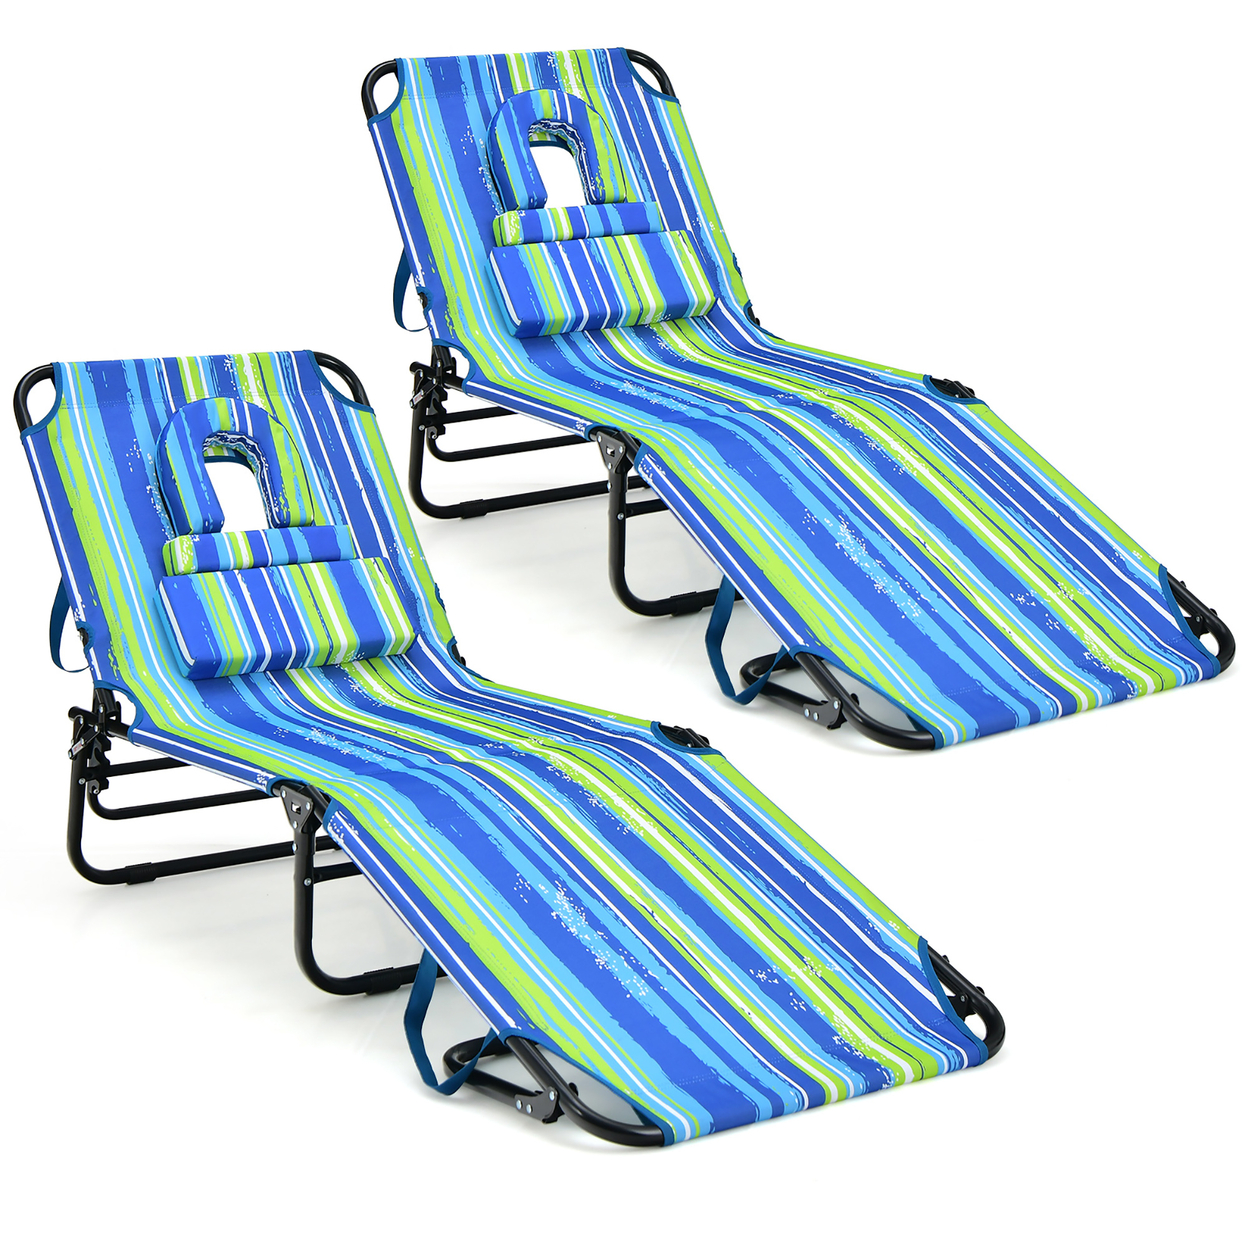 2PCS 5-Position Lounge Chair Adjustable Beach Chaise W/ Face Cavity & Pillows - Blue,Green,Black